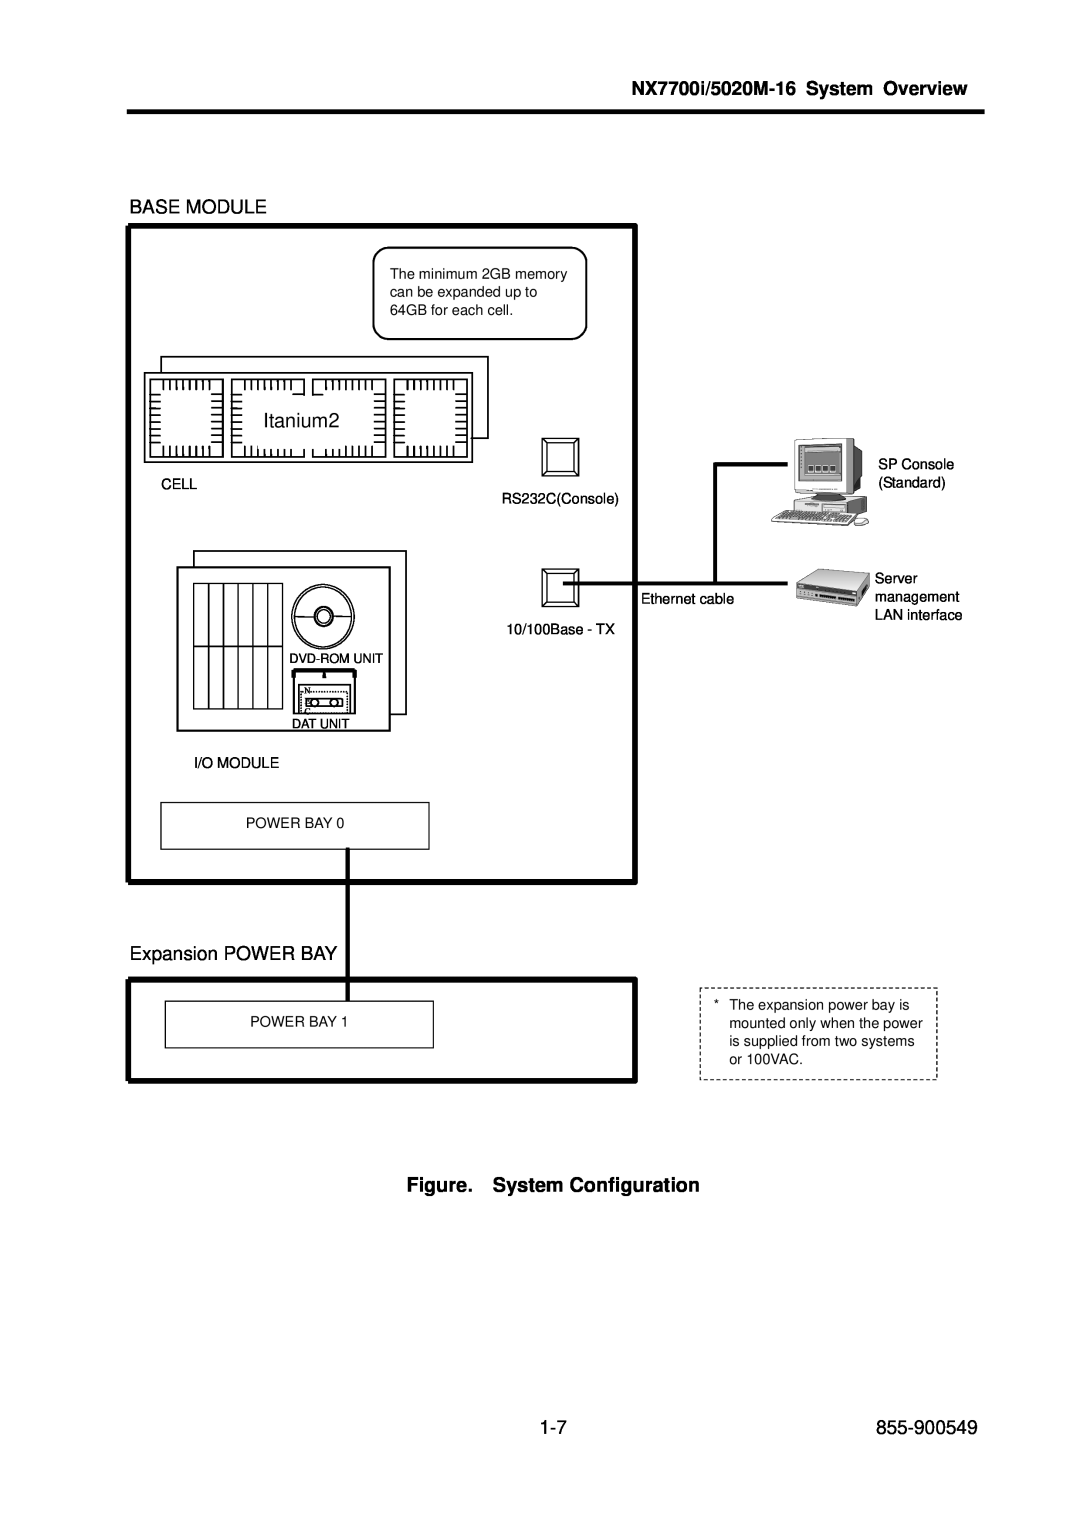 NEC operation manual Itanium2, Figure. System Configuration, NX7700i/5020M-16 System Overview 